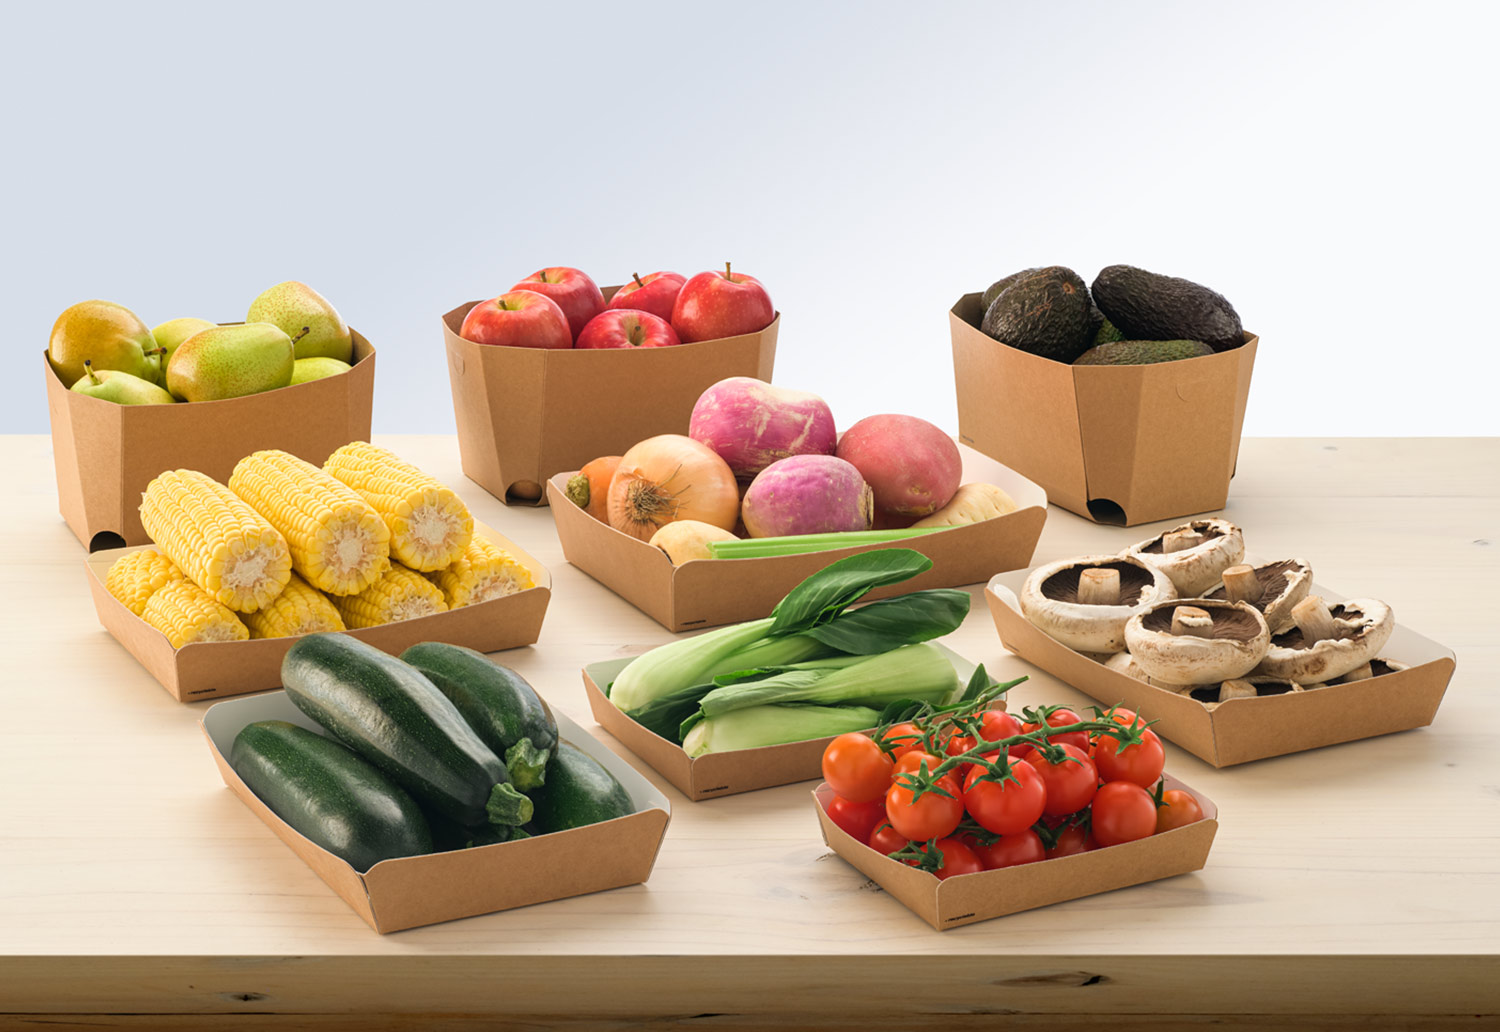 Image of Detpak Market Trays - the sustainable produce tray